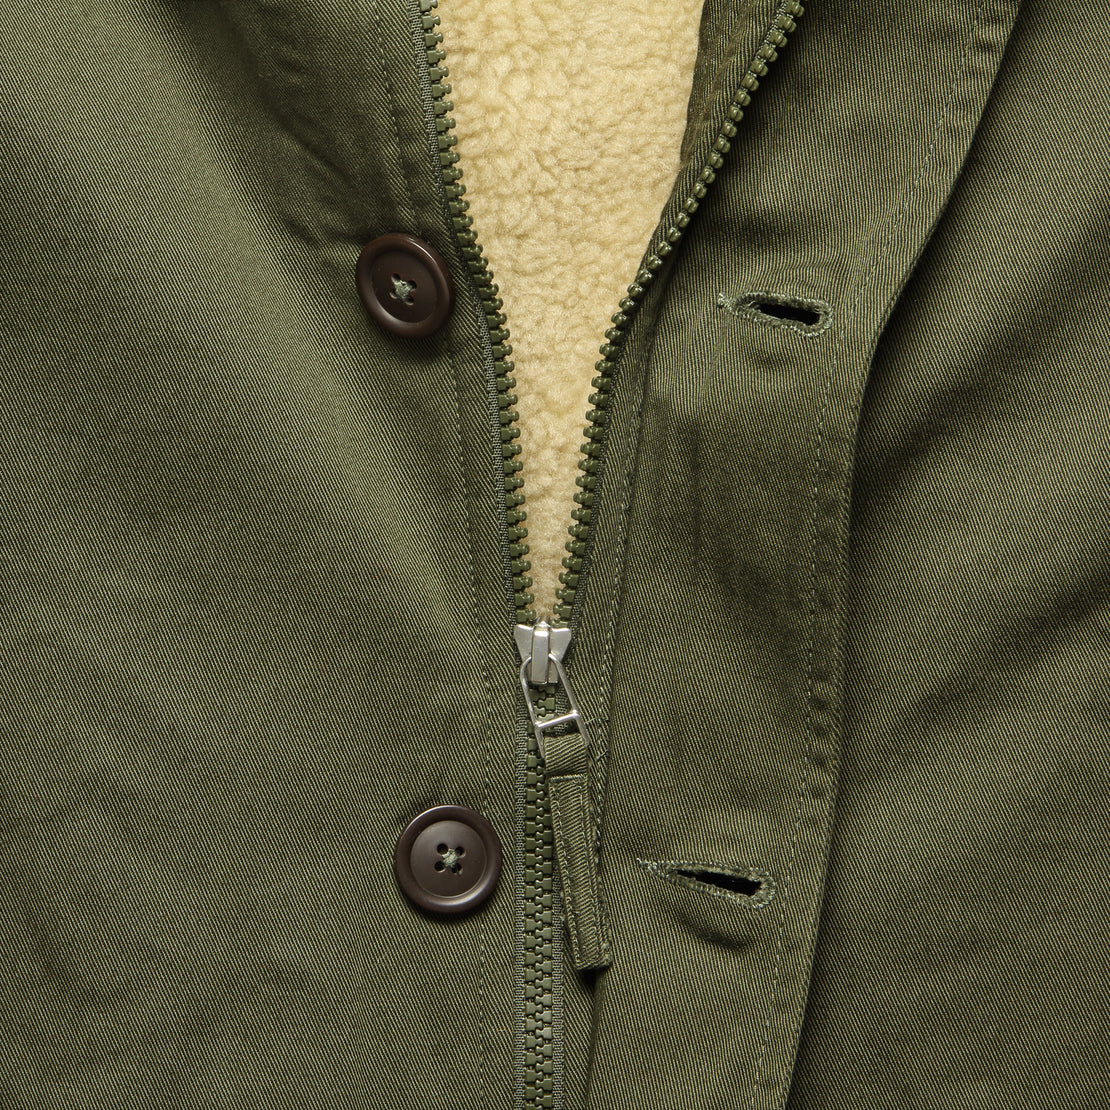 UNIVERSAL WORKS N1 Fleece-Lined Cotton-Twill Bomber Jacket for Men